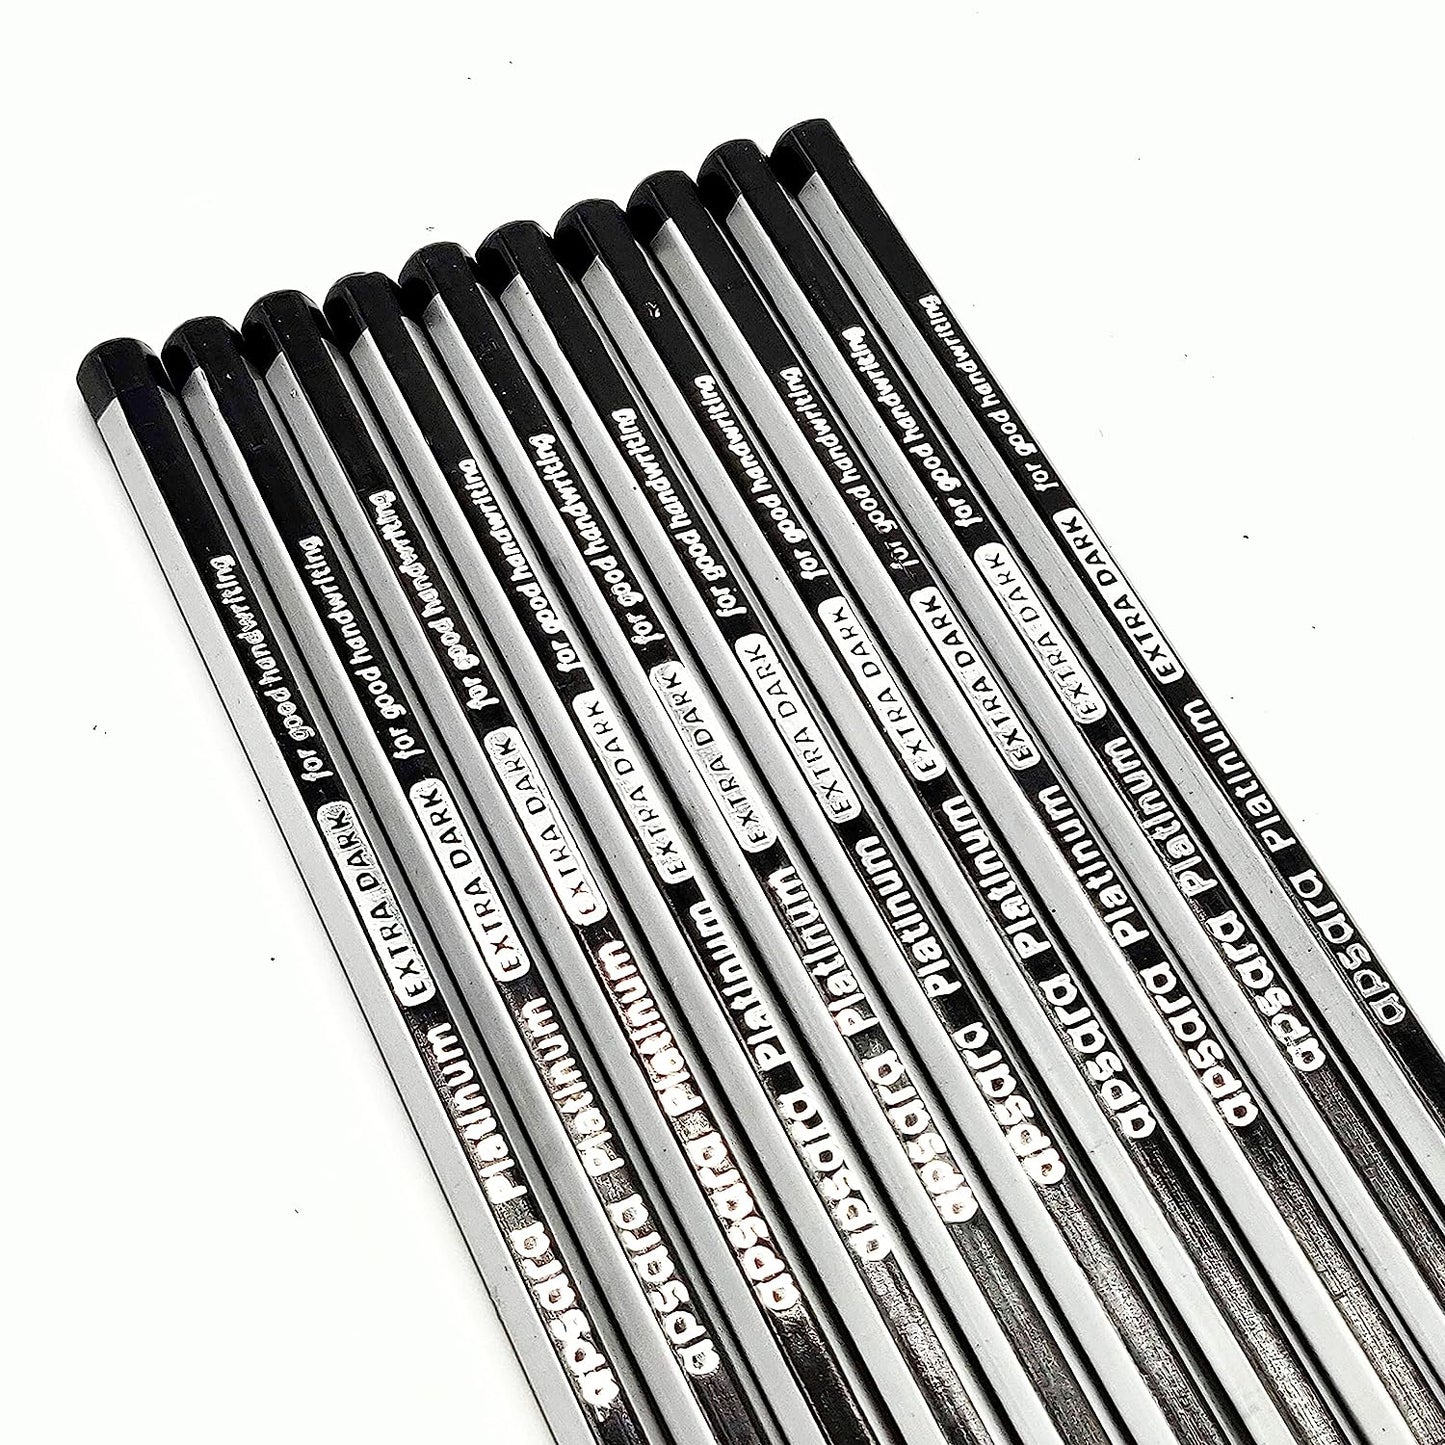 Apsara Platinum Pencils,Strong Grip, Extra Dark, Good Handwriting, Soft Wood for Easy Sharpening, Free Sharpener & Eraser (Pack of 20 Pencils)